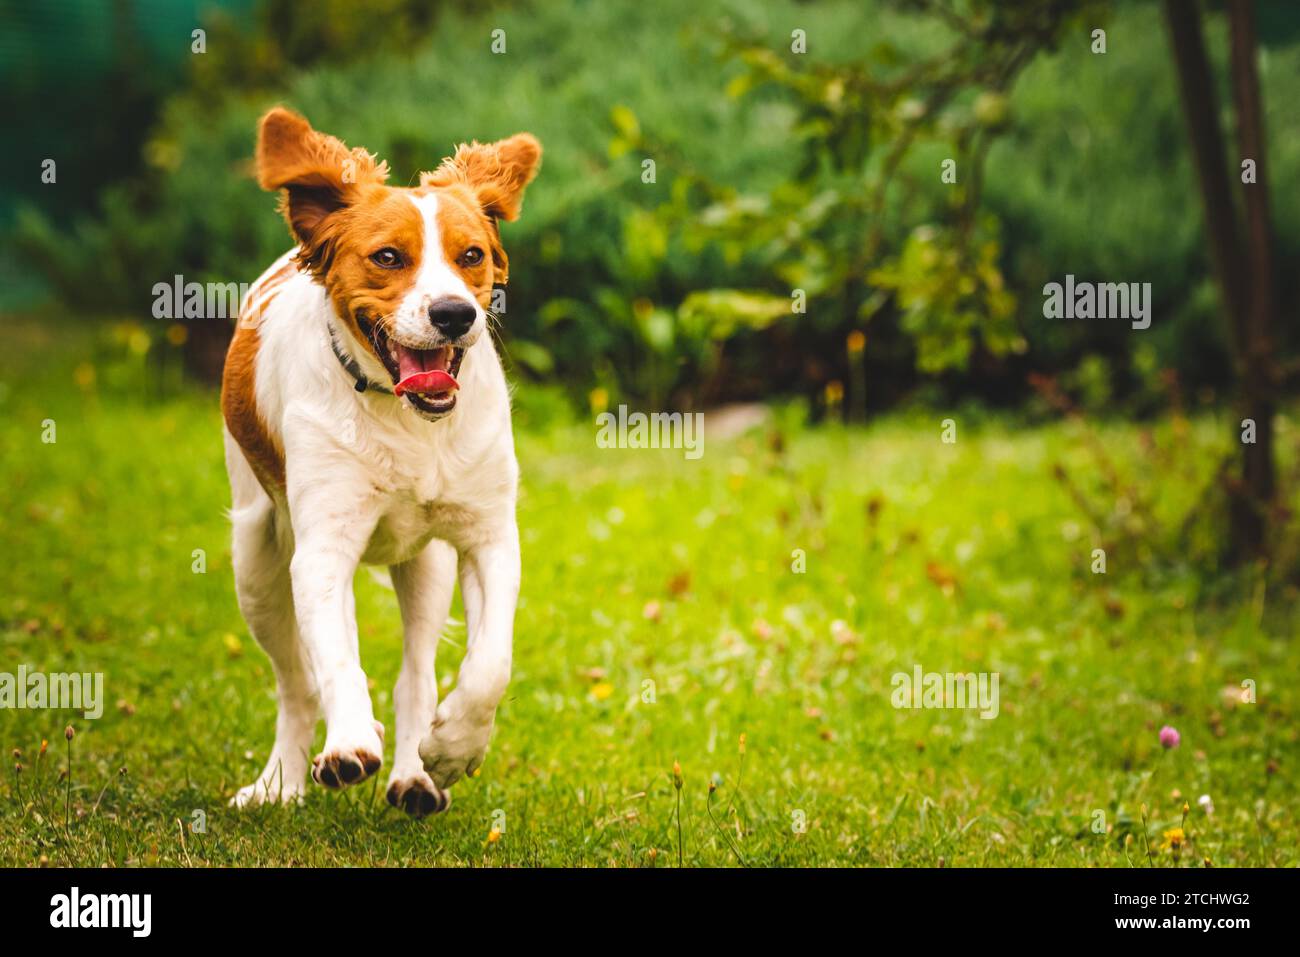 Breton spaniel puppy running towards camera, copy space on right Stock Photo